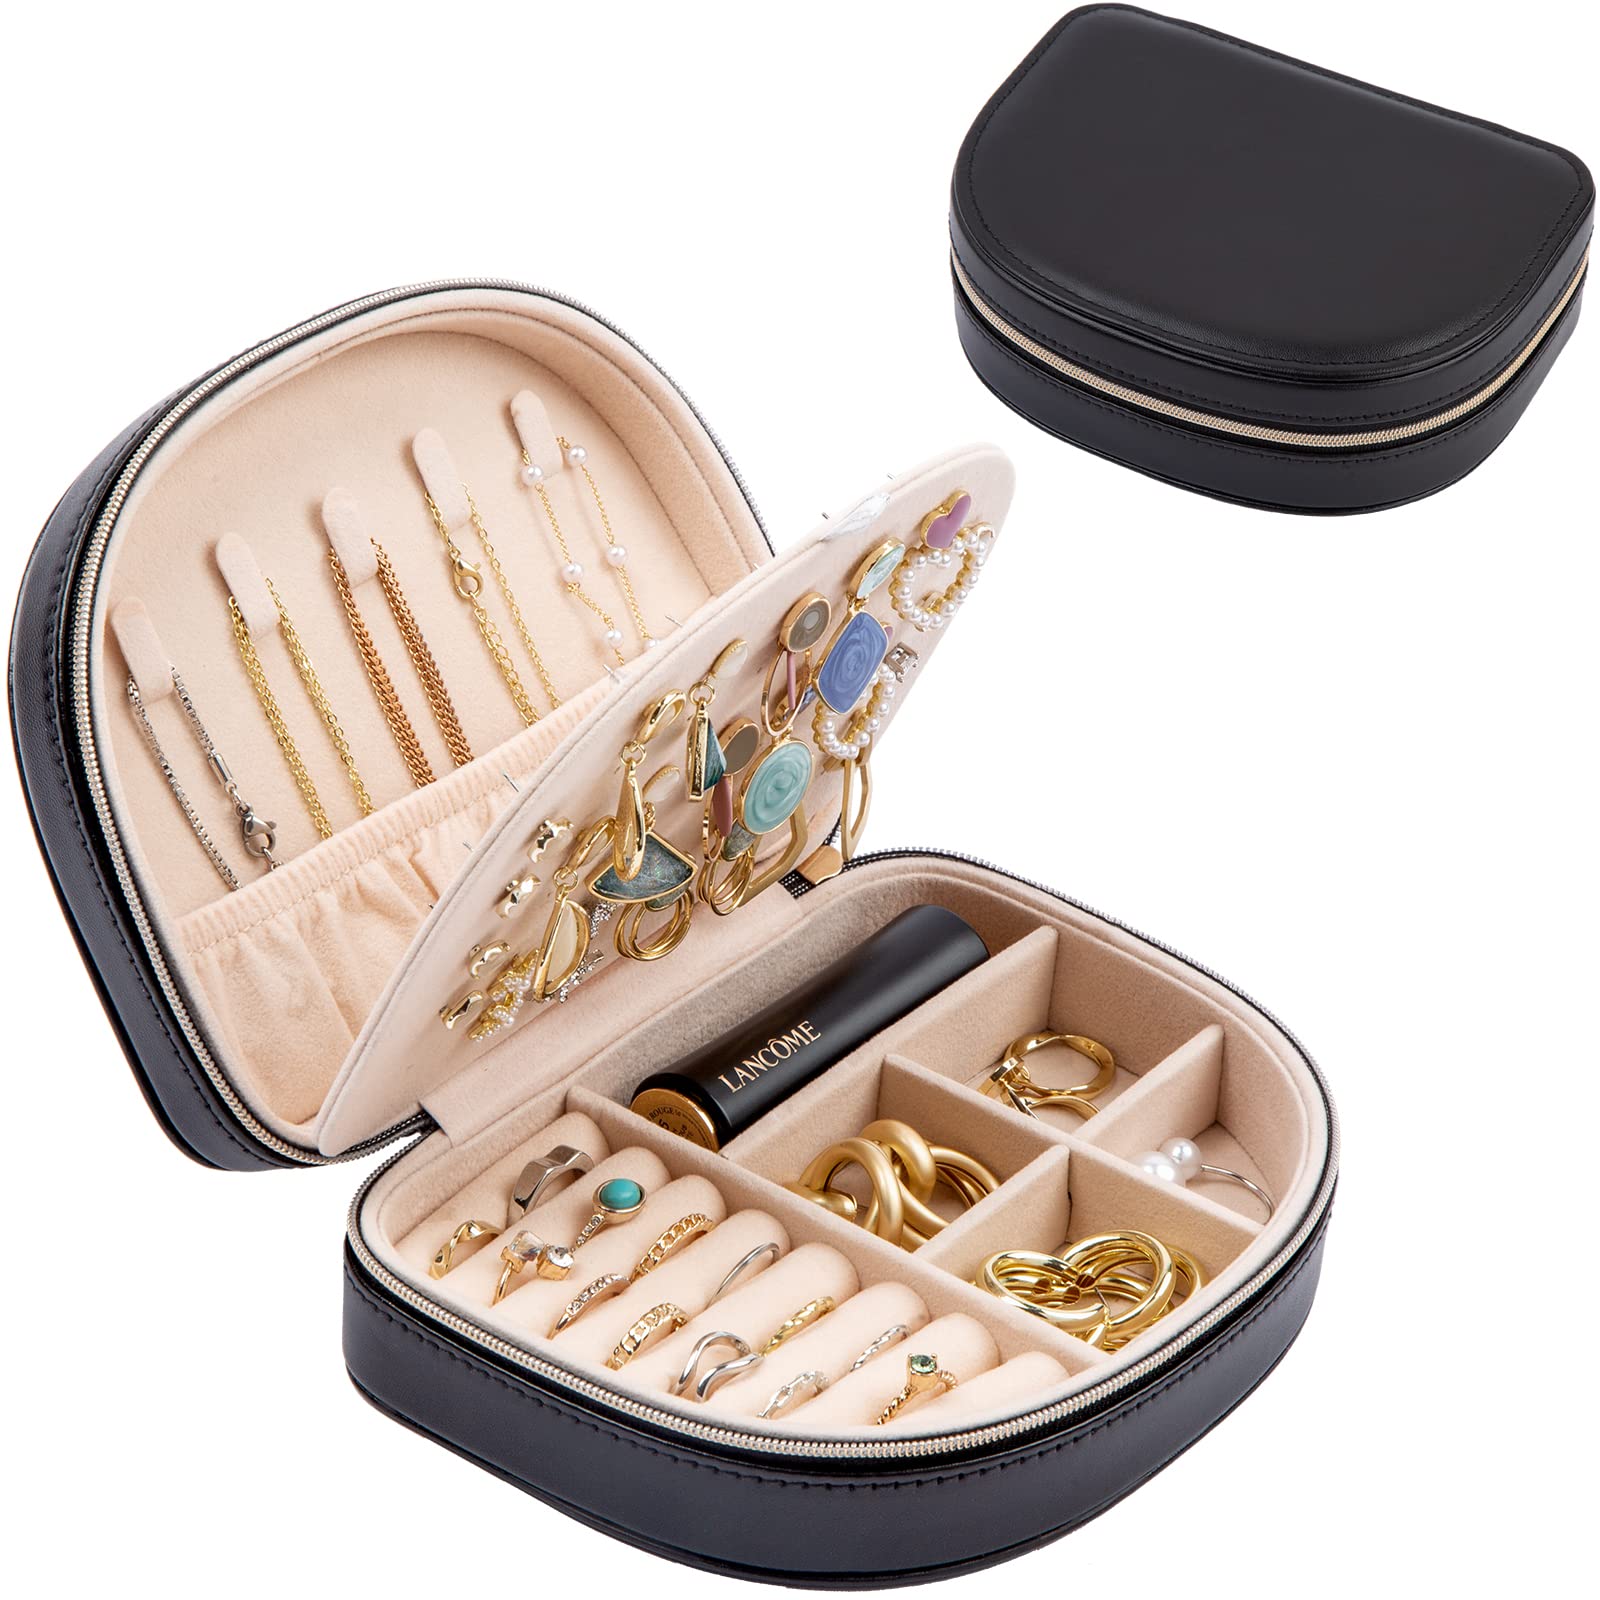  ProCase Plush Velvet Jewelry Boxes, Compact Travel